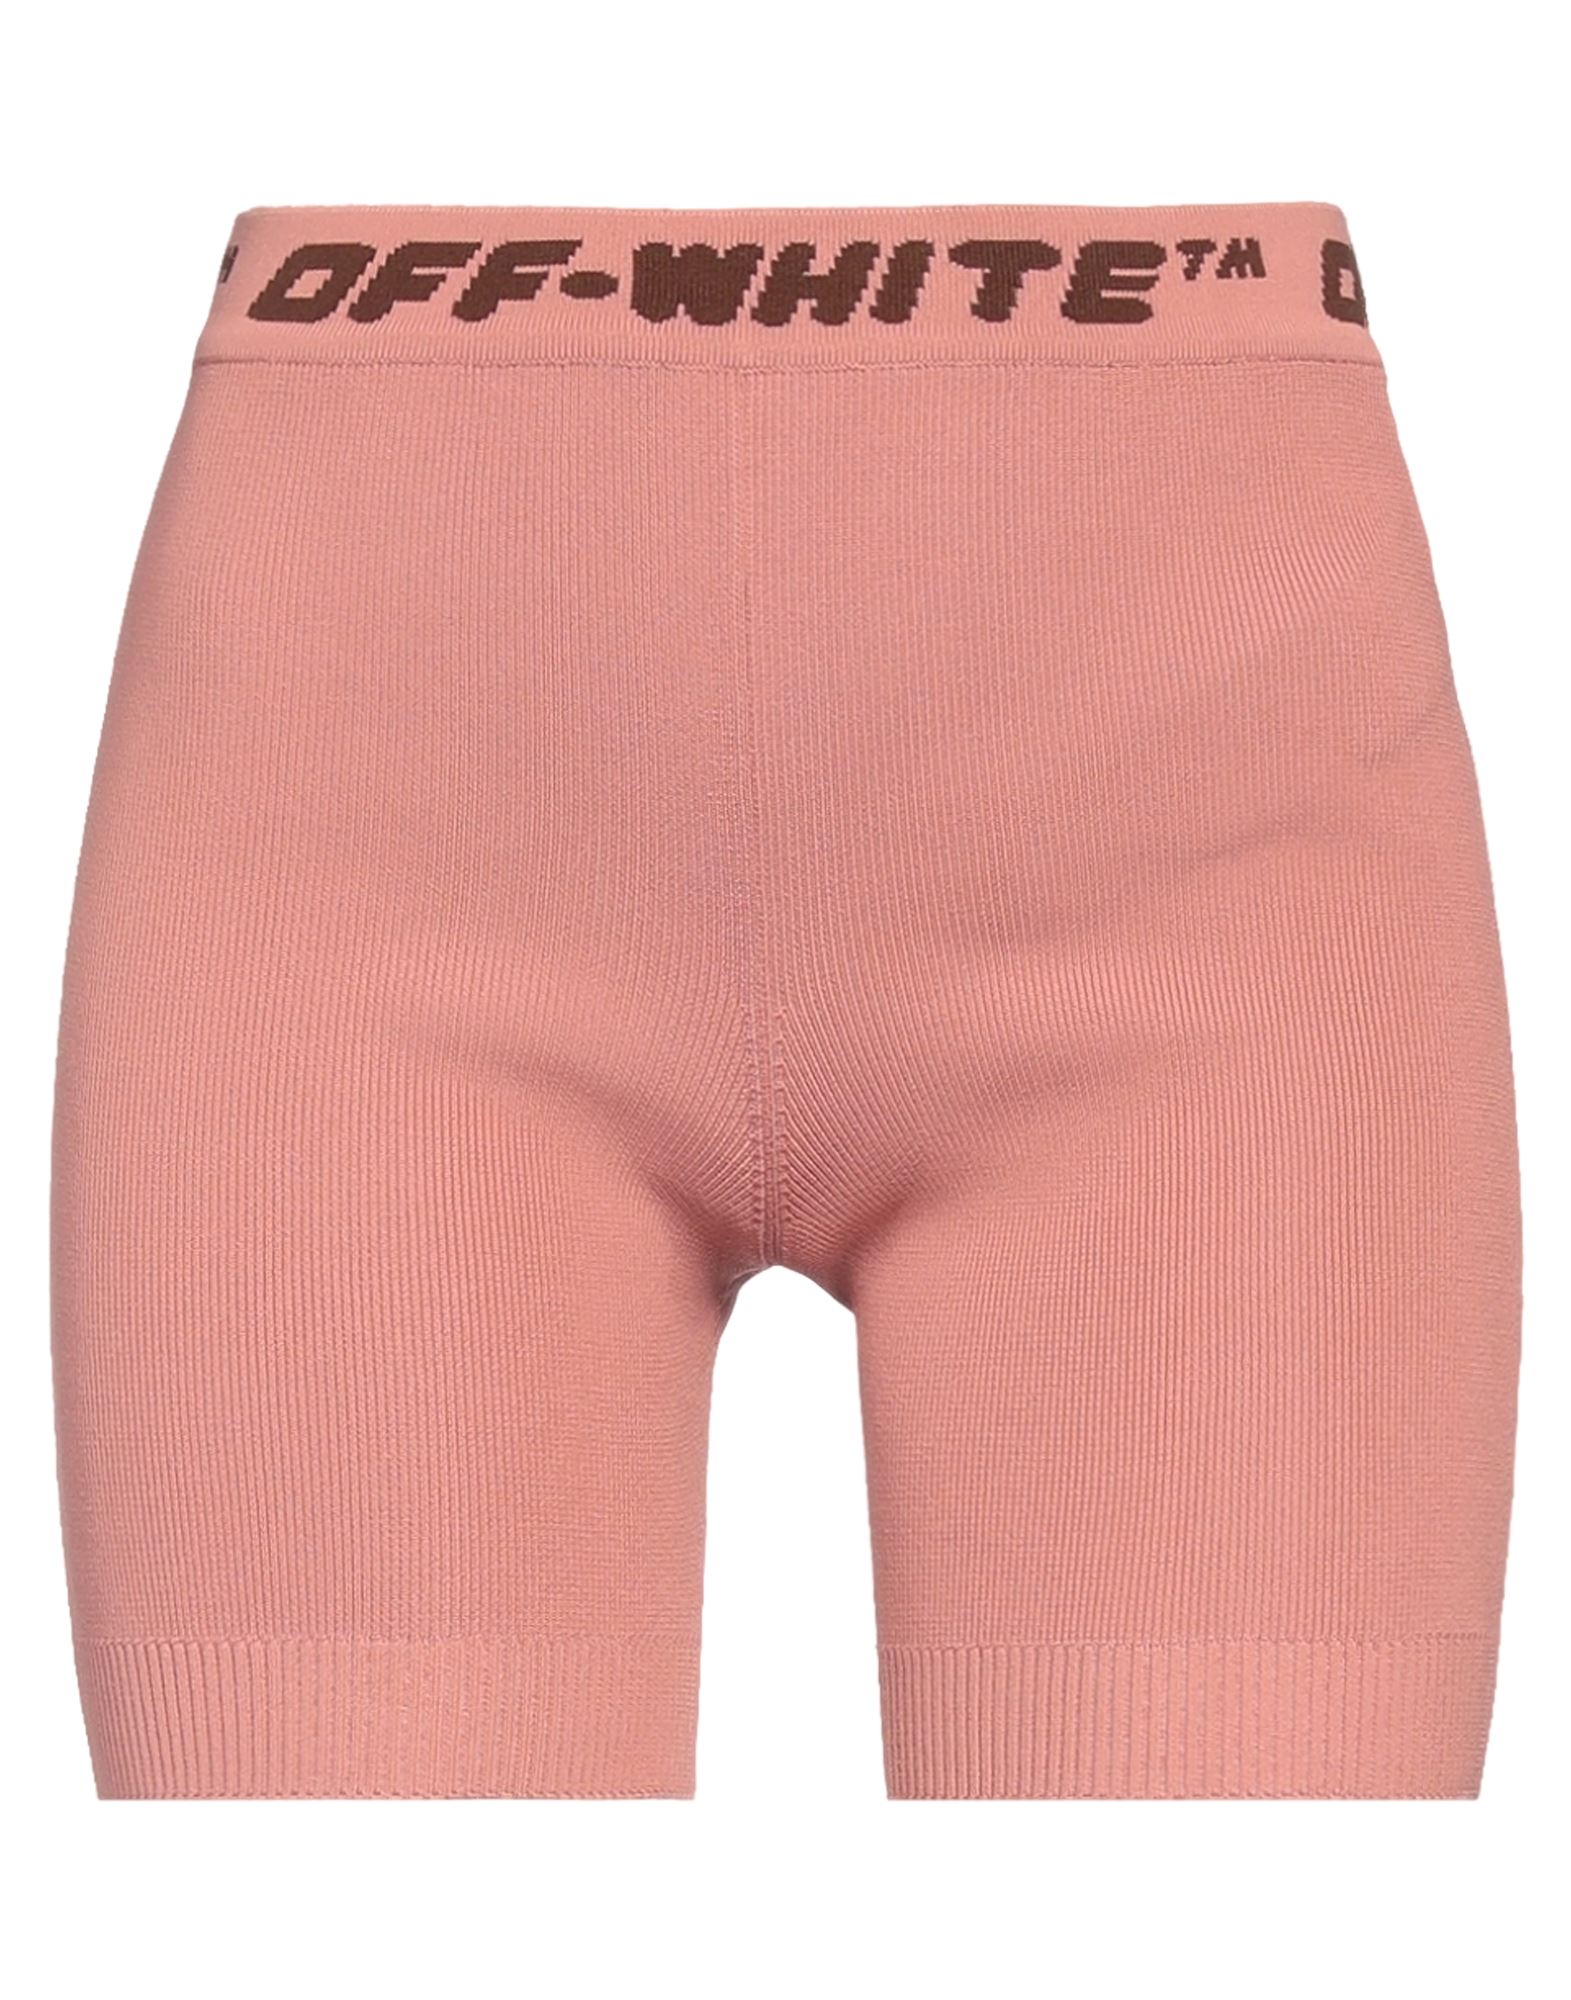 Off-White c/o Virgil Abloh Leggings for Women, Online Sale up to 85% off